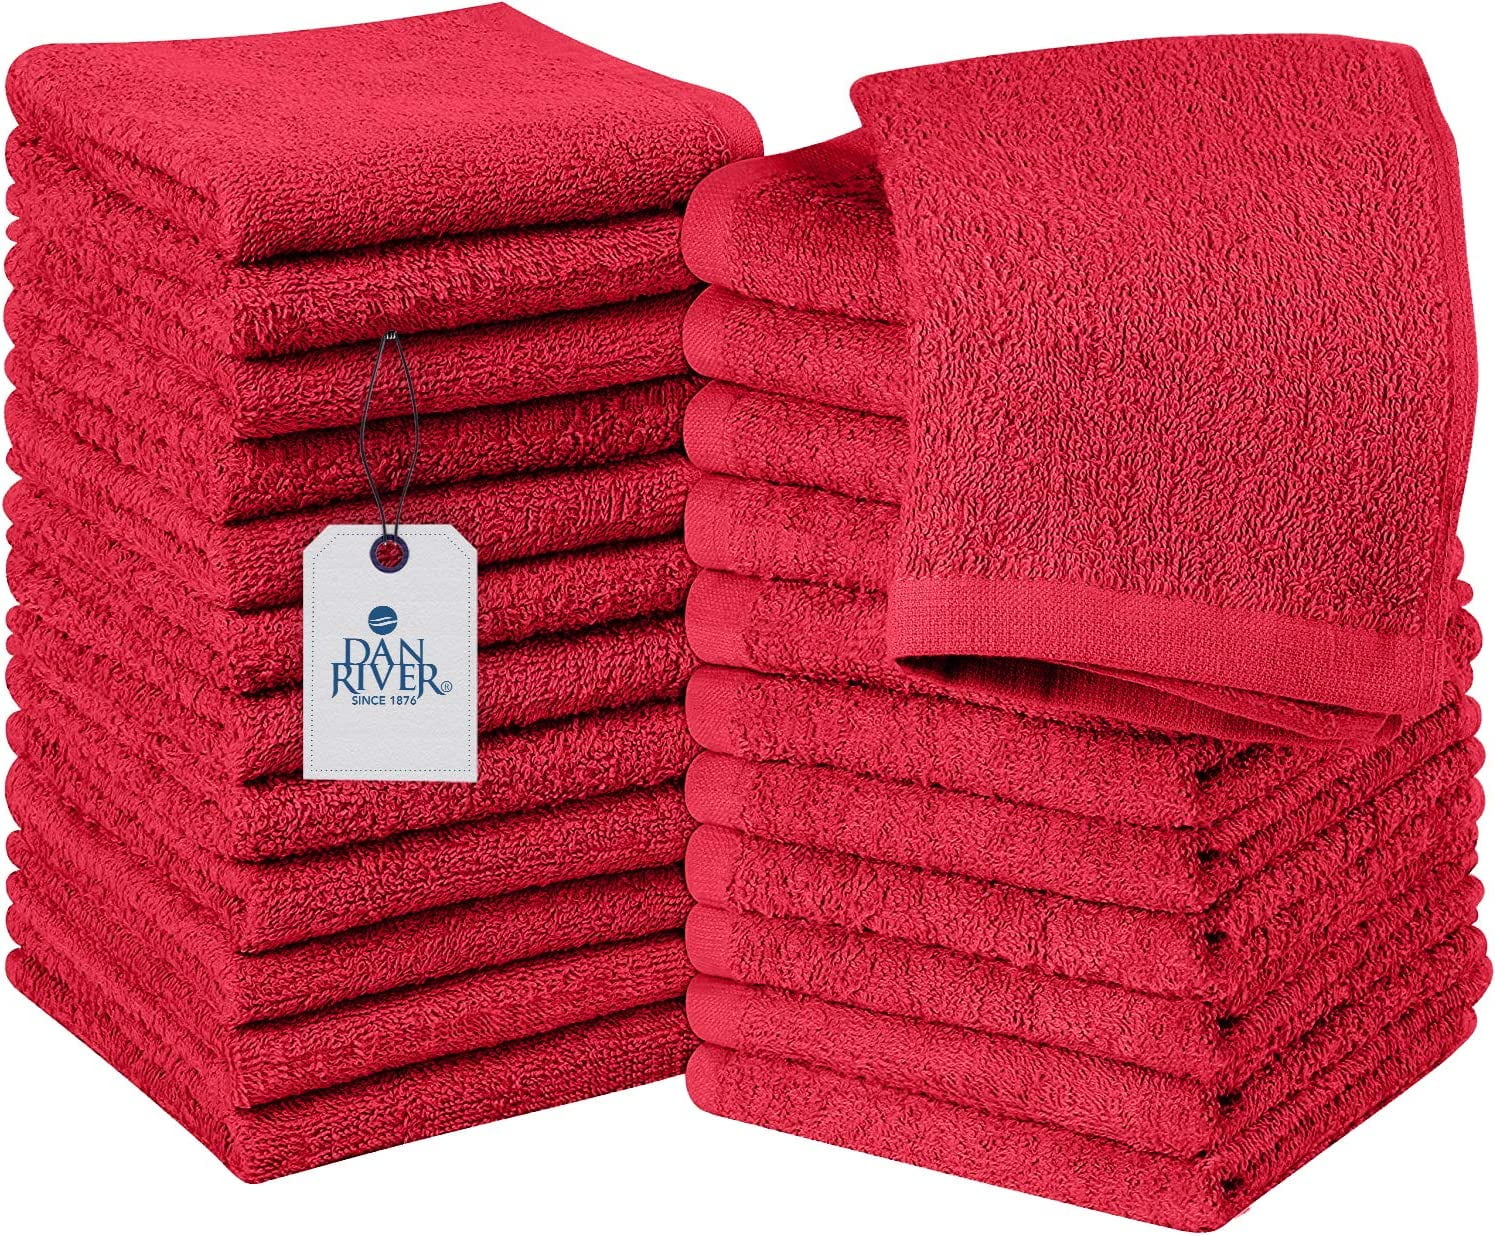 Bulk Bath Towels, Hand Towels & Wash Cloths